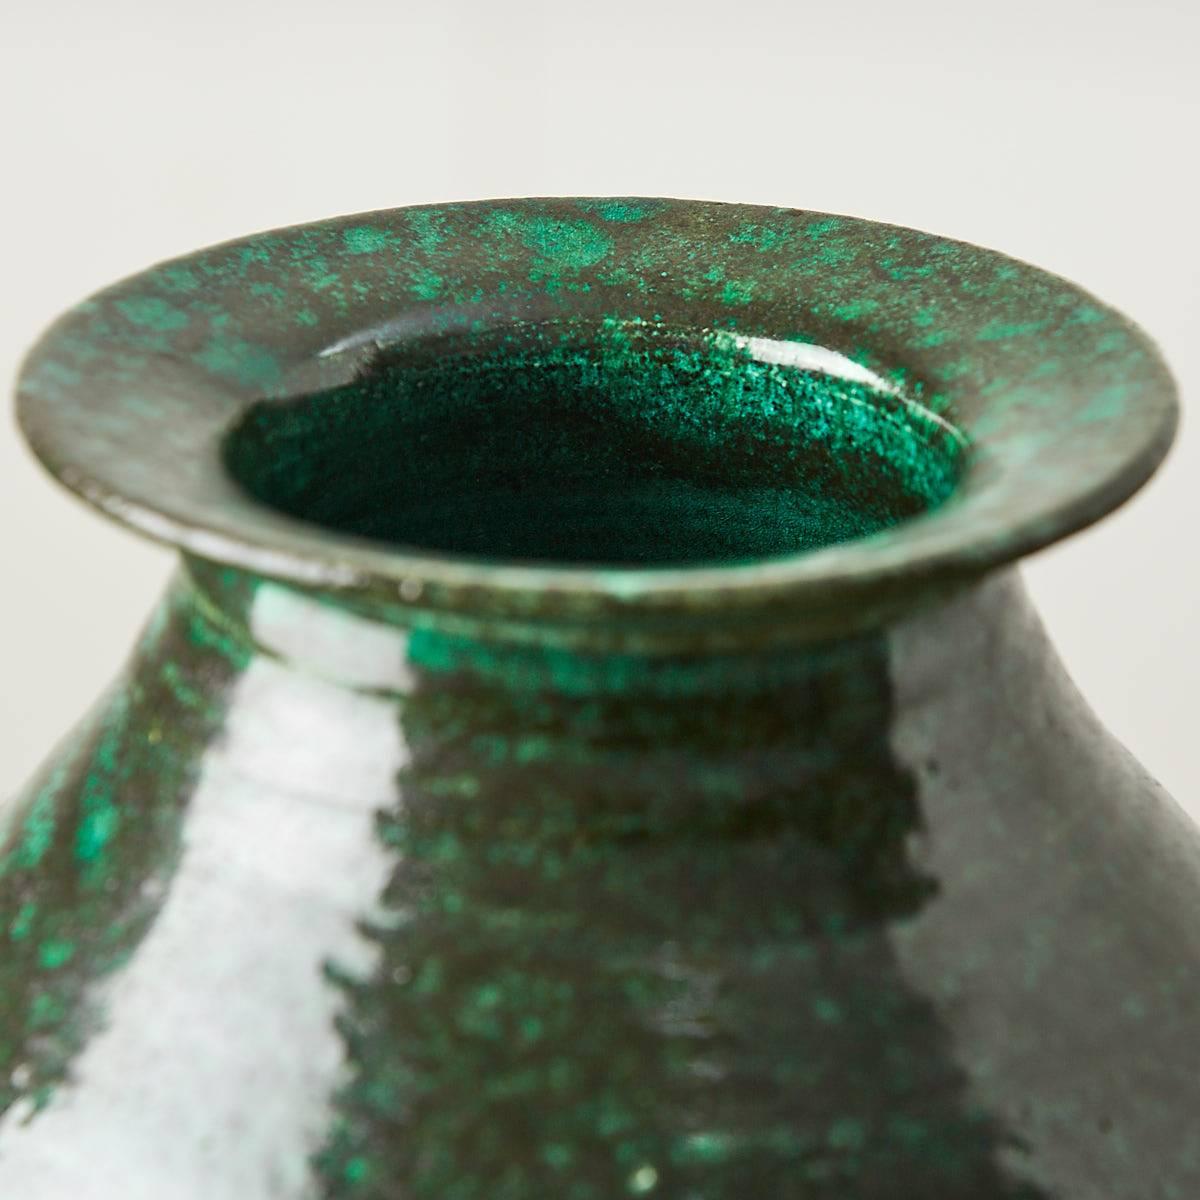 Abdo Nagi studio pot, emerald glaze with lustrous bronze brush strokes.